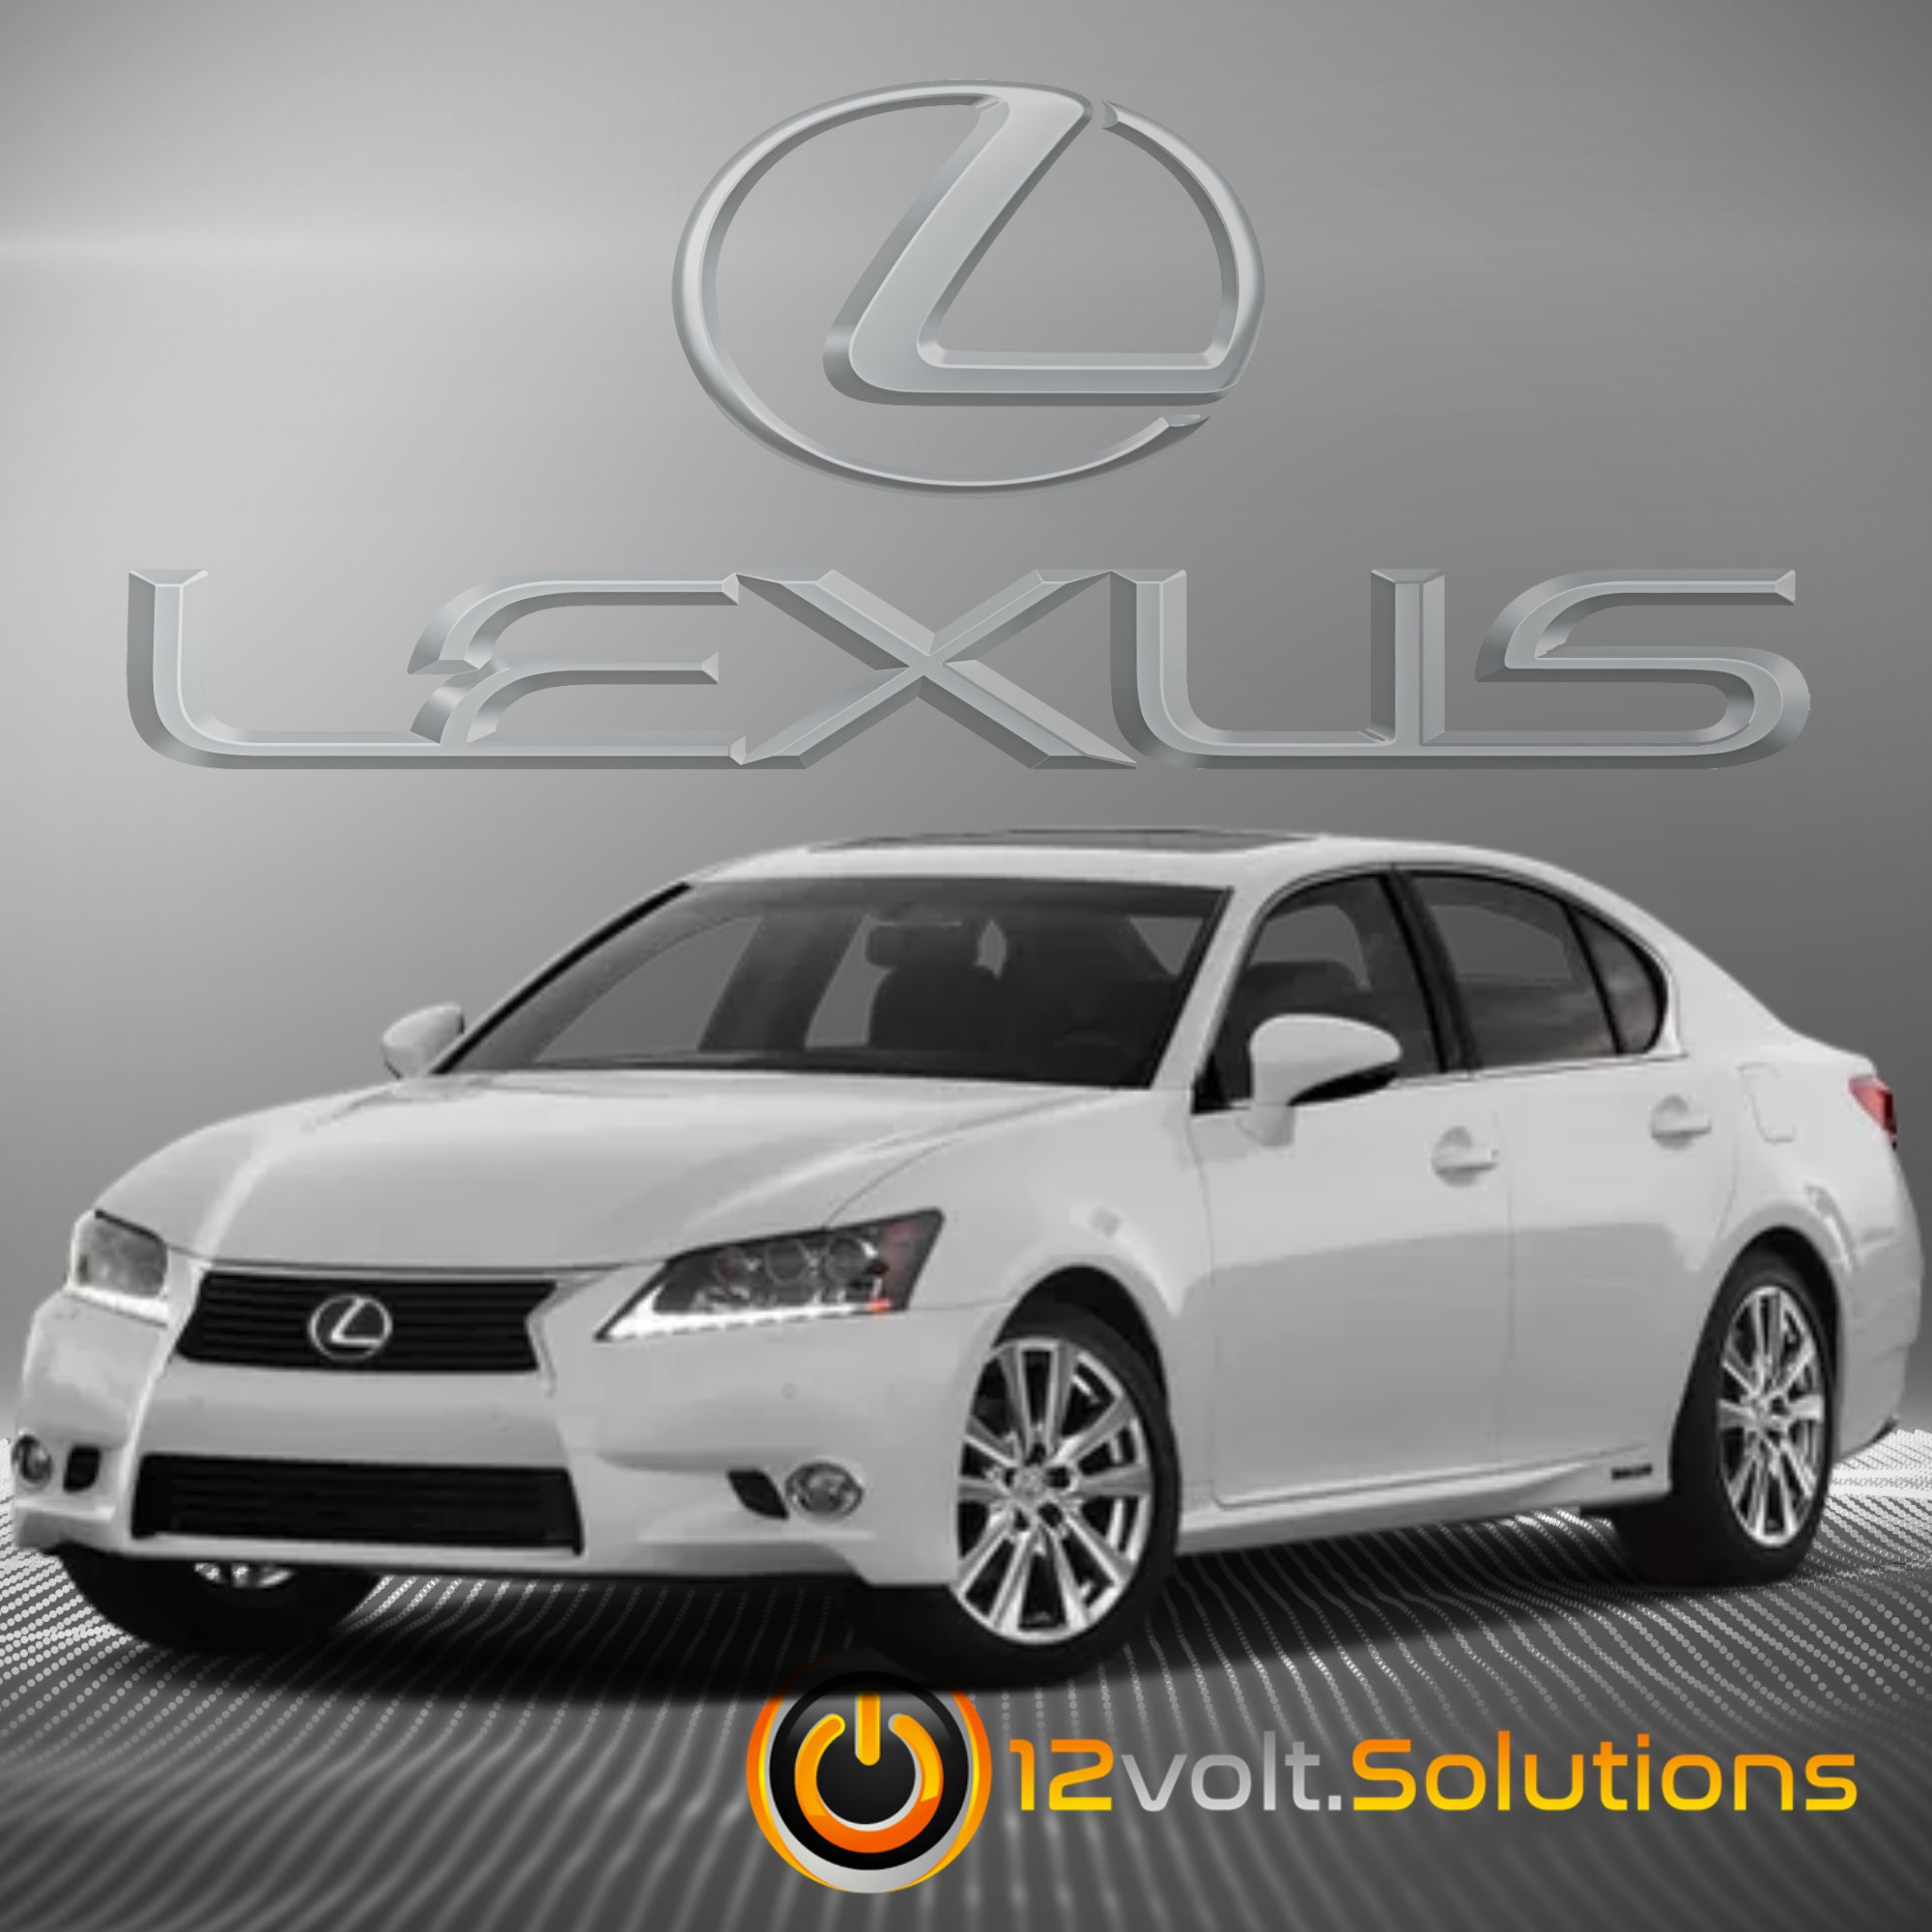 2013-2015 Lexus GS450h Plug & Play Remote Start Kit (Push Button Start)-12Volt.Solutions